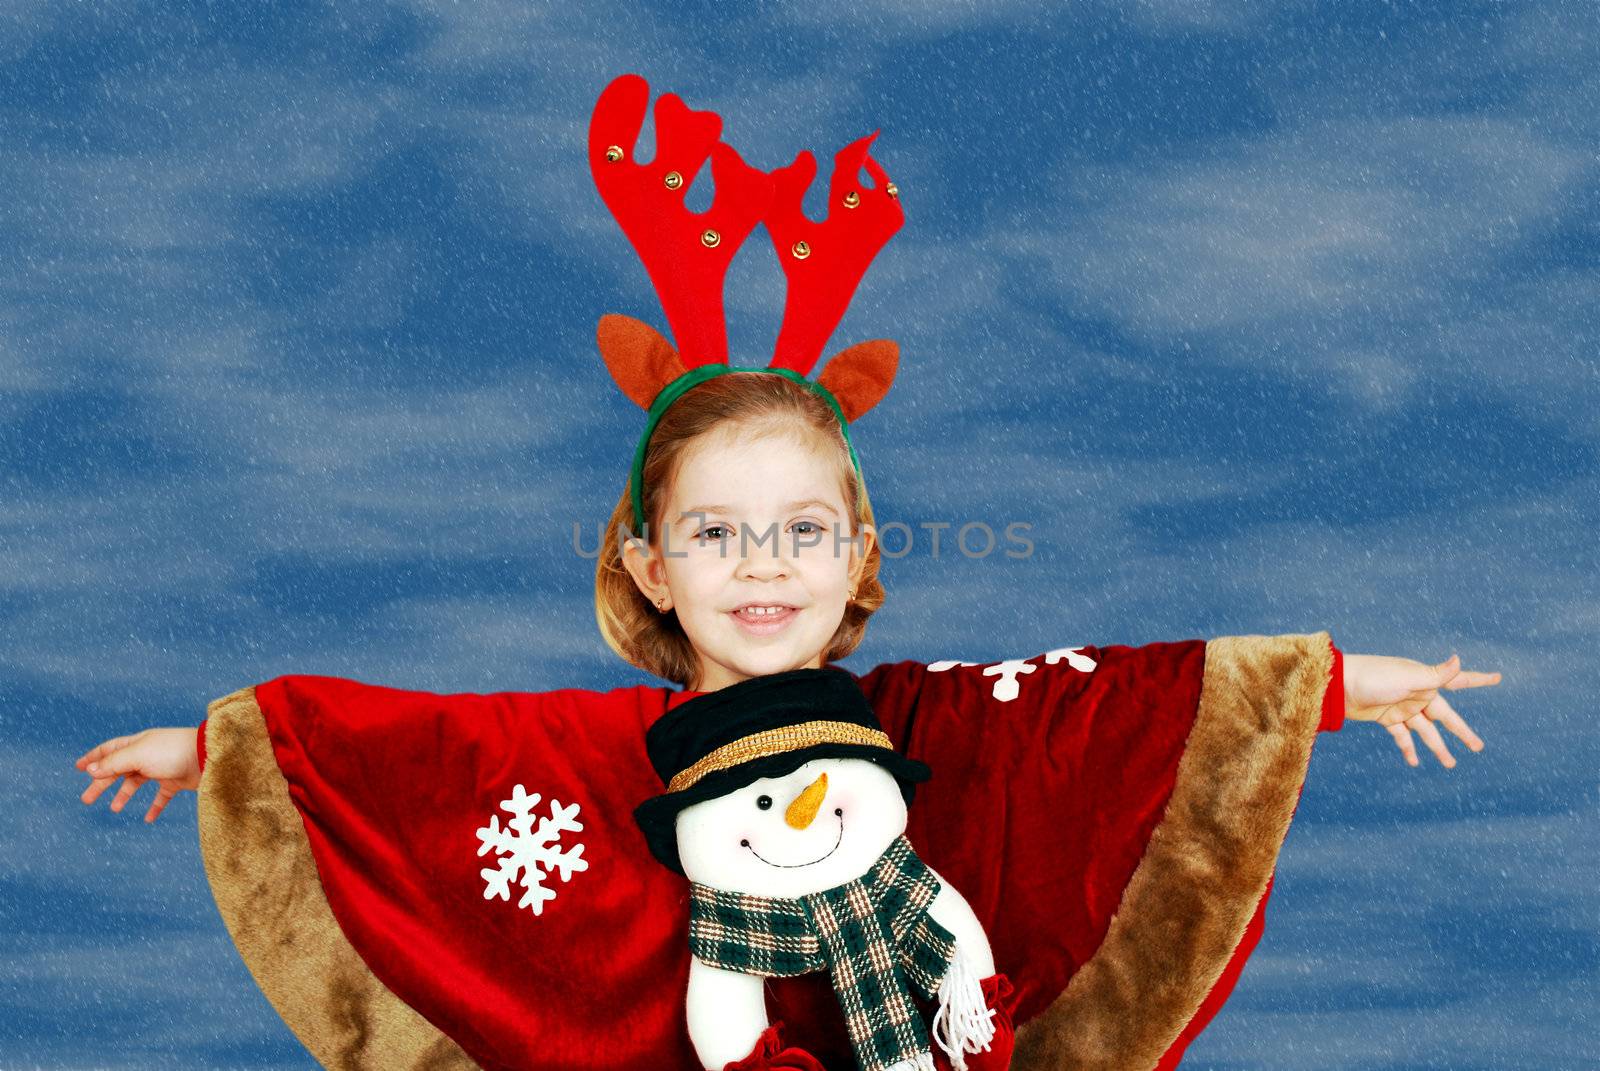 beautiful little girl with deer Rudolf horn on head by goce